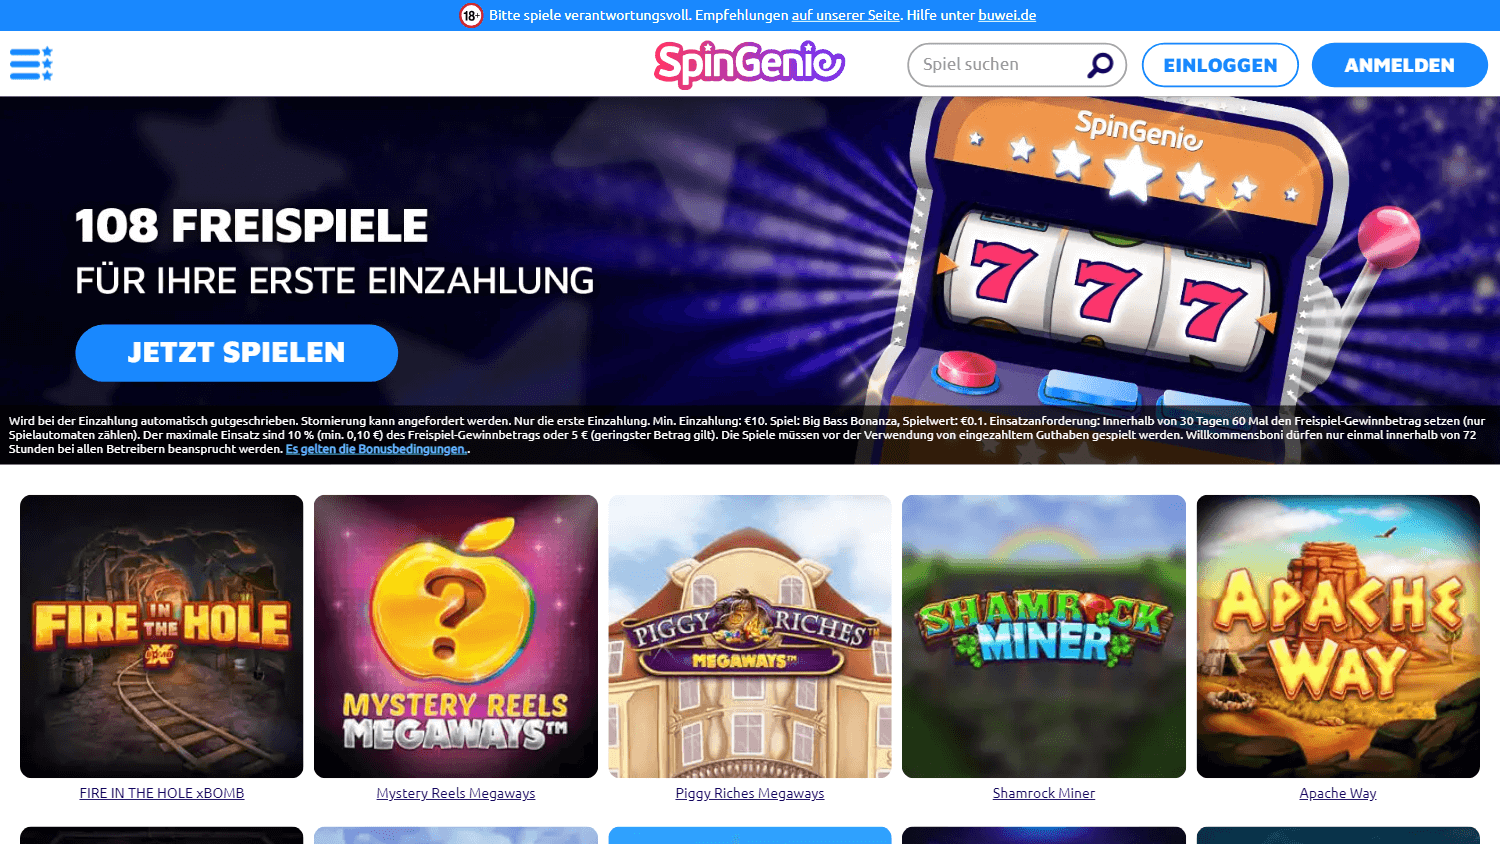 spingenie_casino_de_homepage_desktop